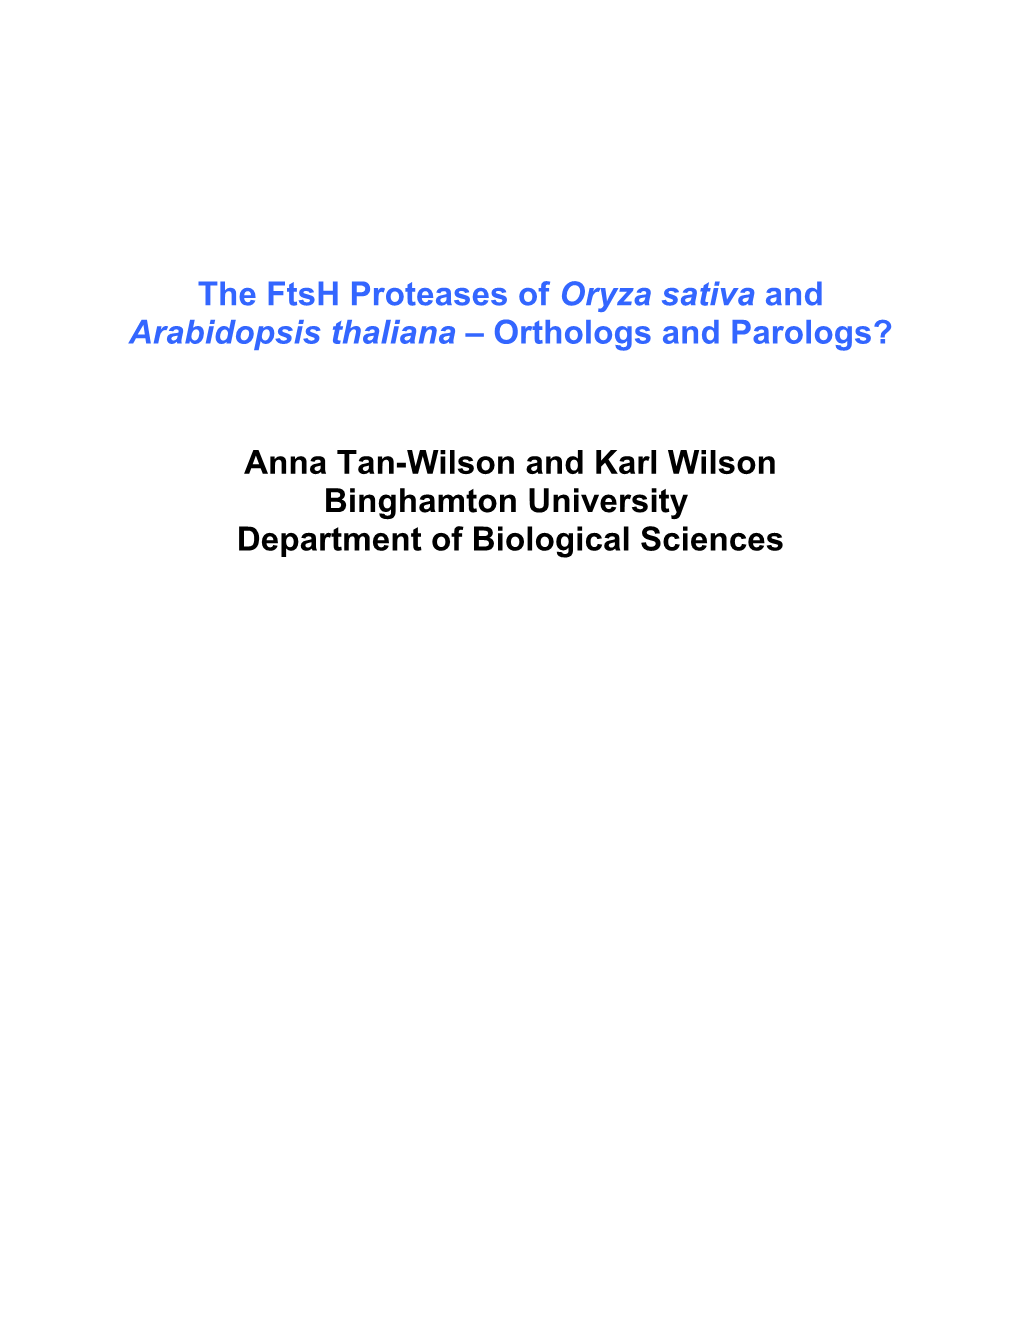 The Ftsh Proteases of Oryza Sativa and Arabidopsis Thaliana Orthologs and Parologs